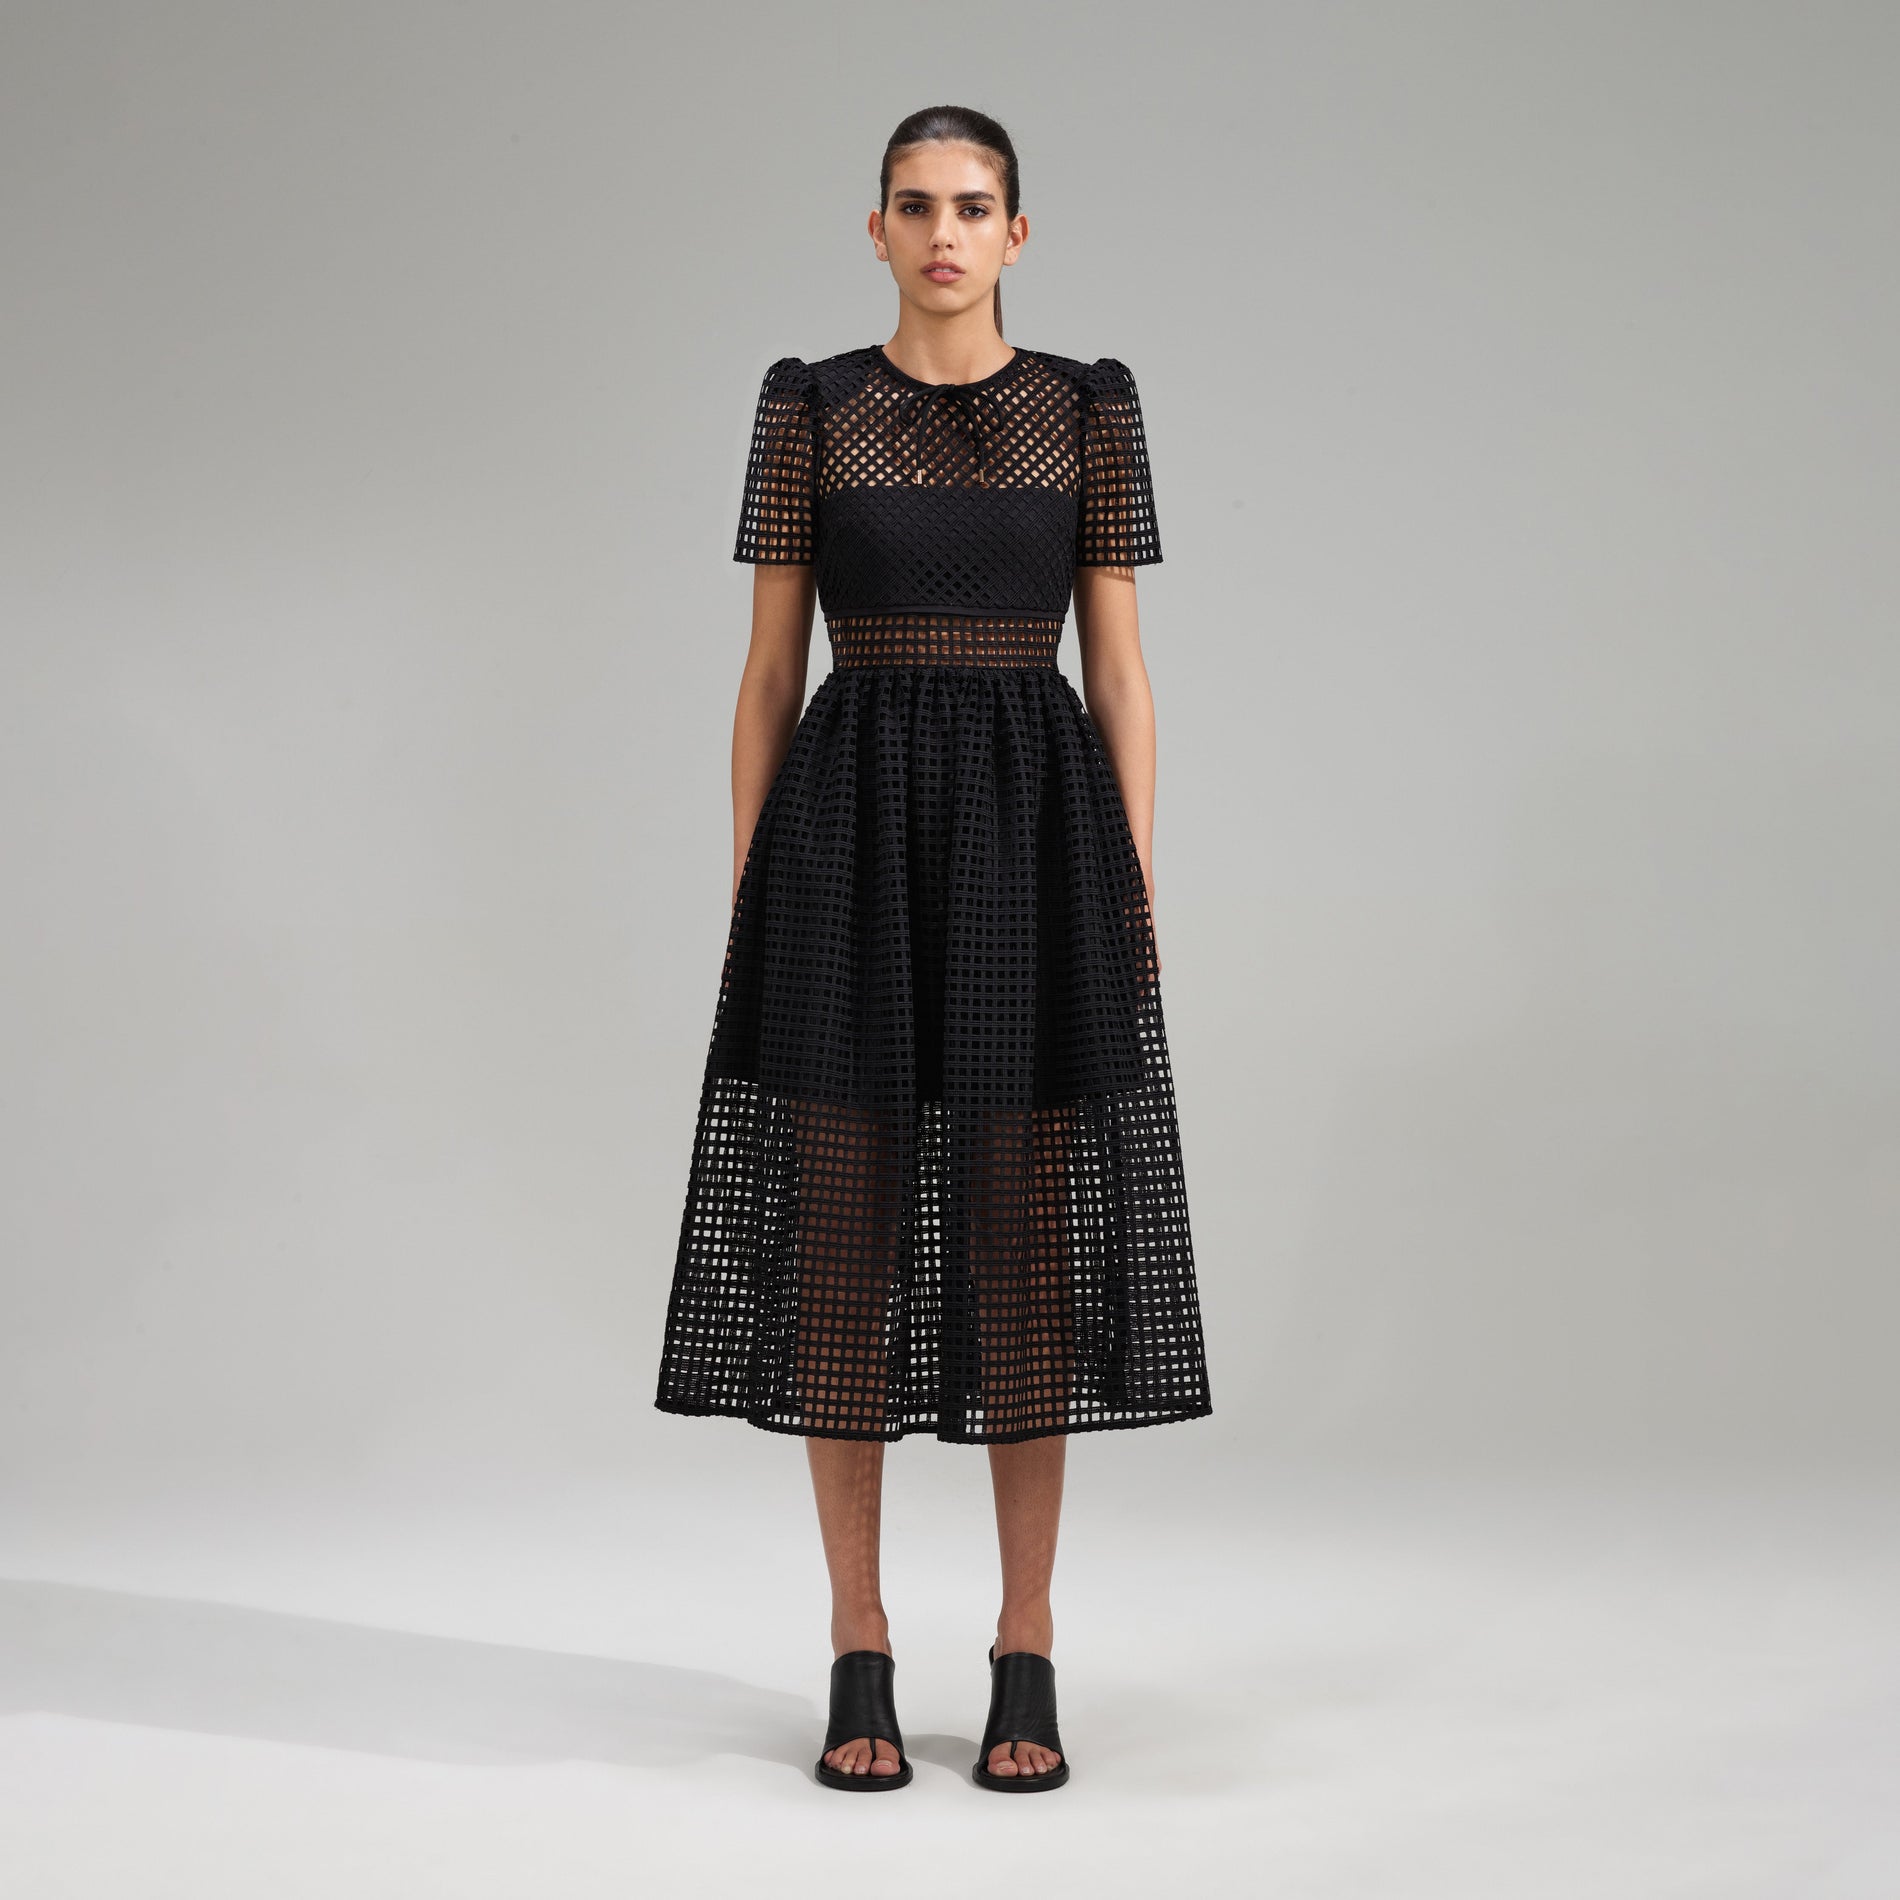 A woman wearing the Black Grid Lace Midi Dress